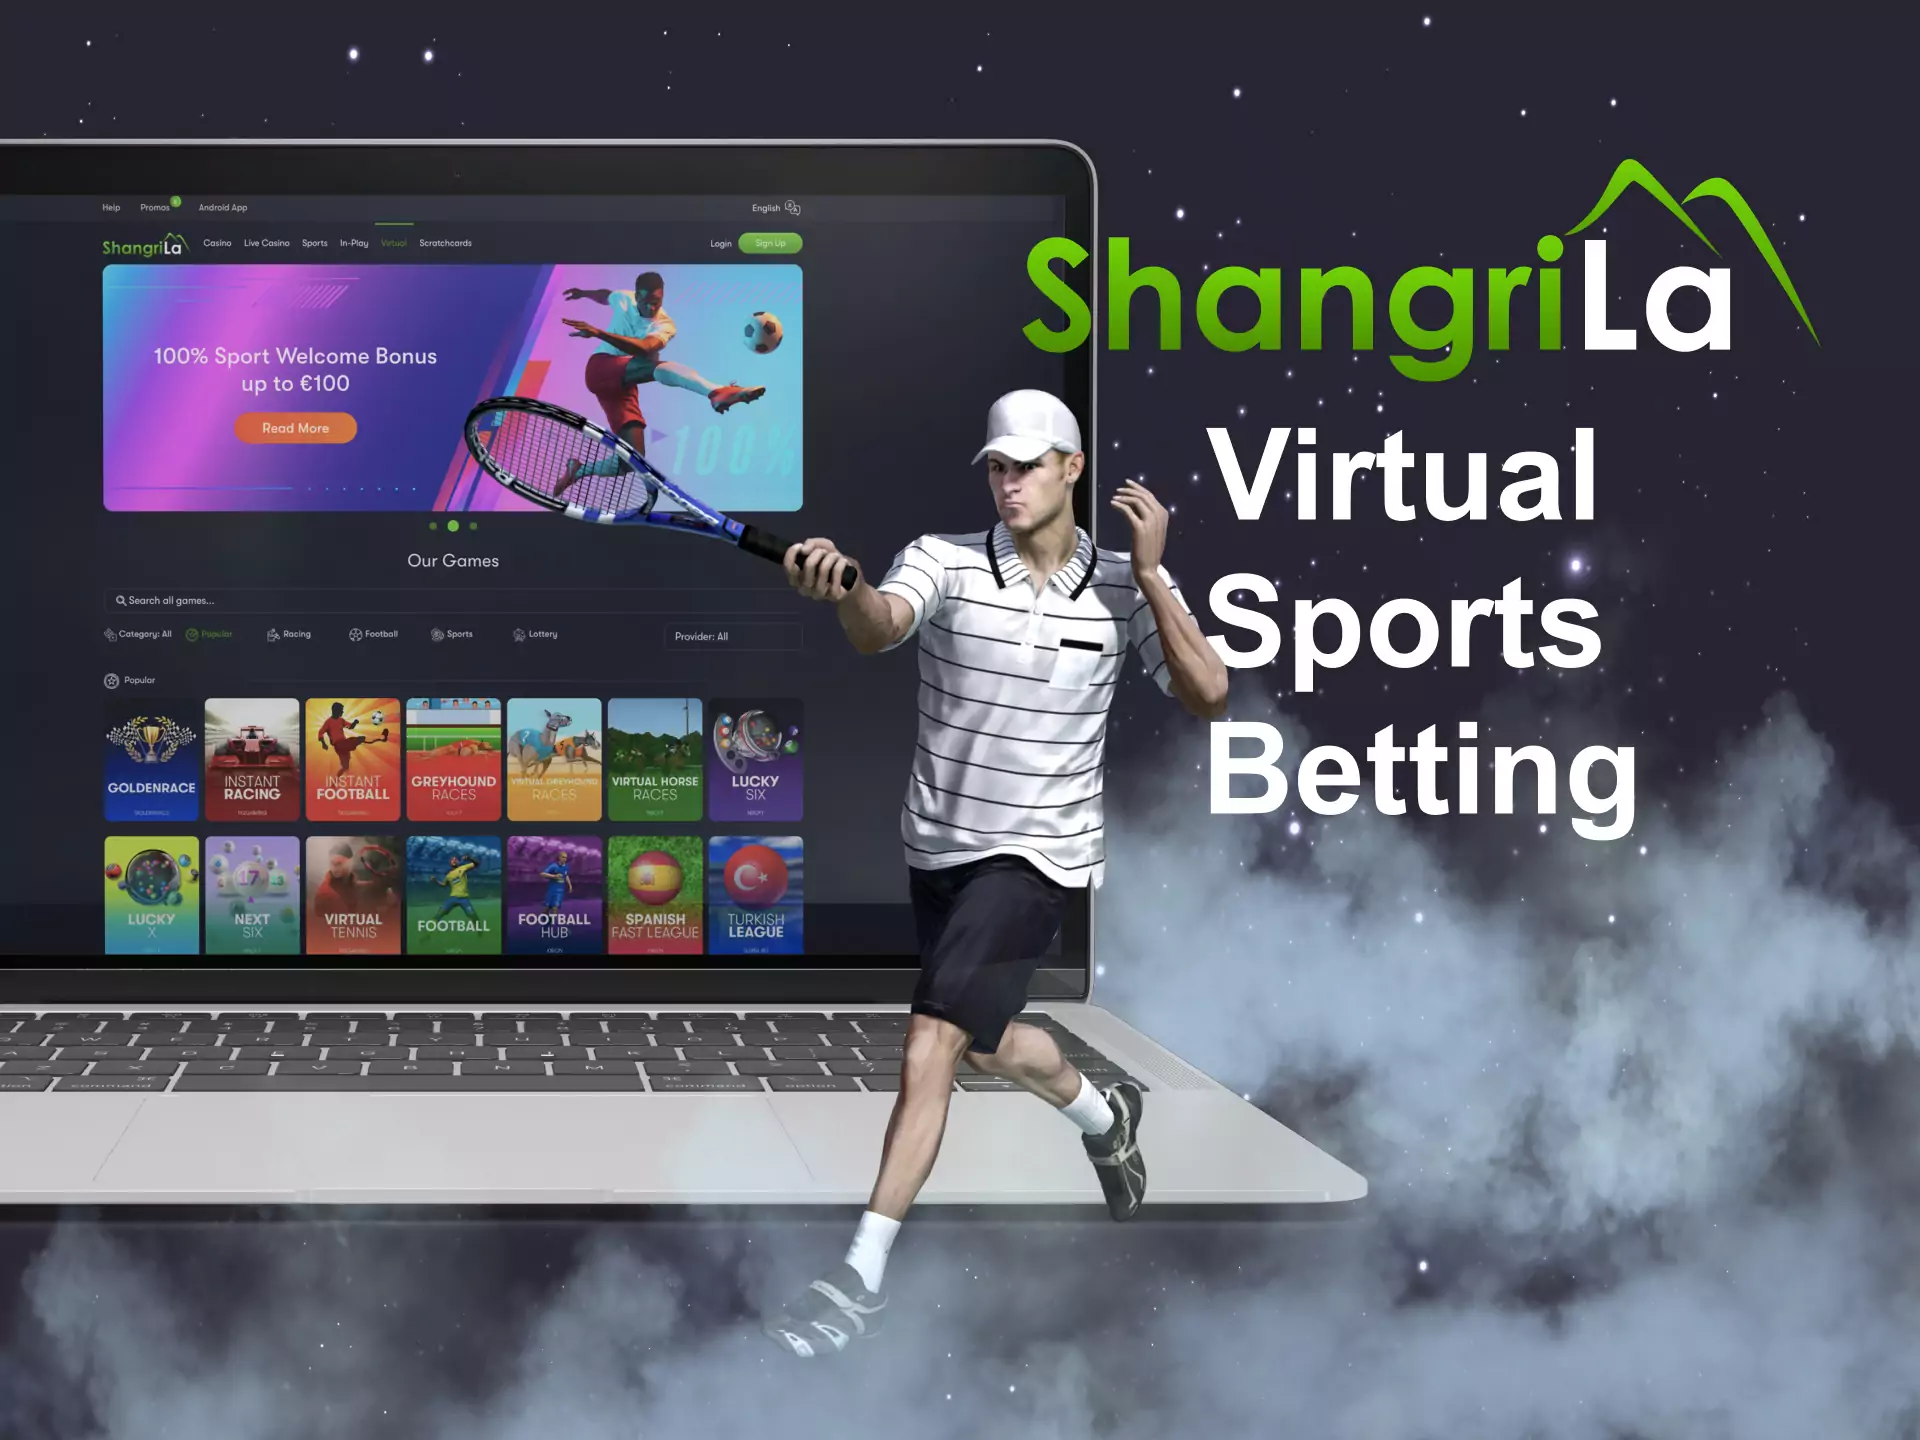 Besides sports betting and online casino, users of Shangri La enjoy virtual sports betting.